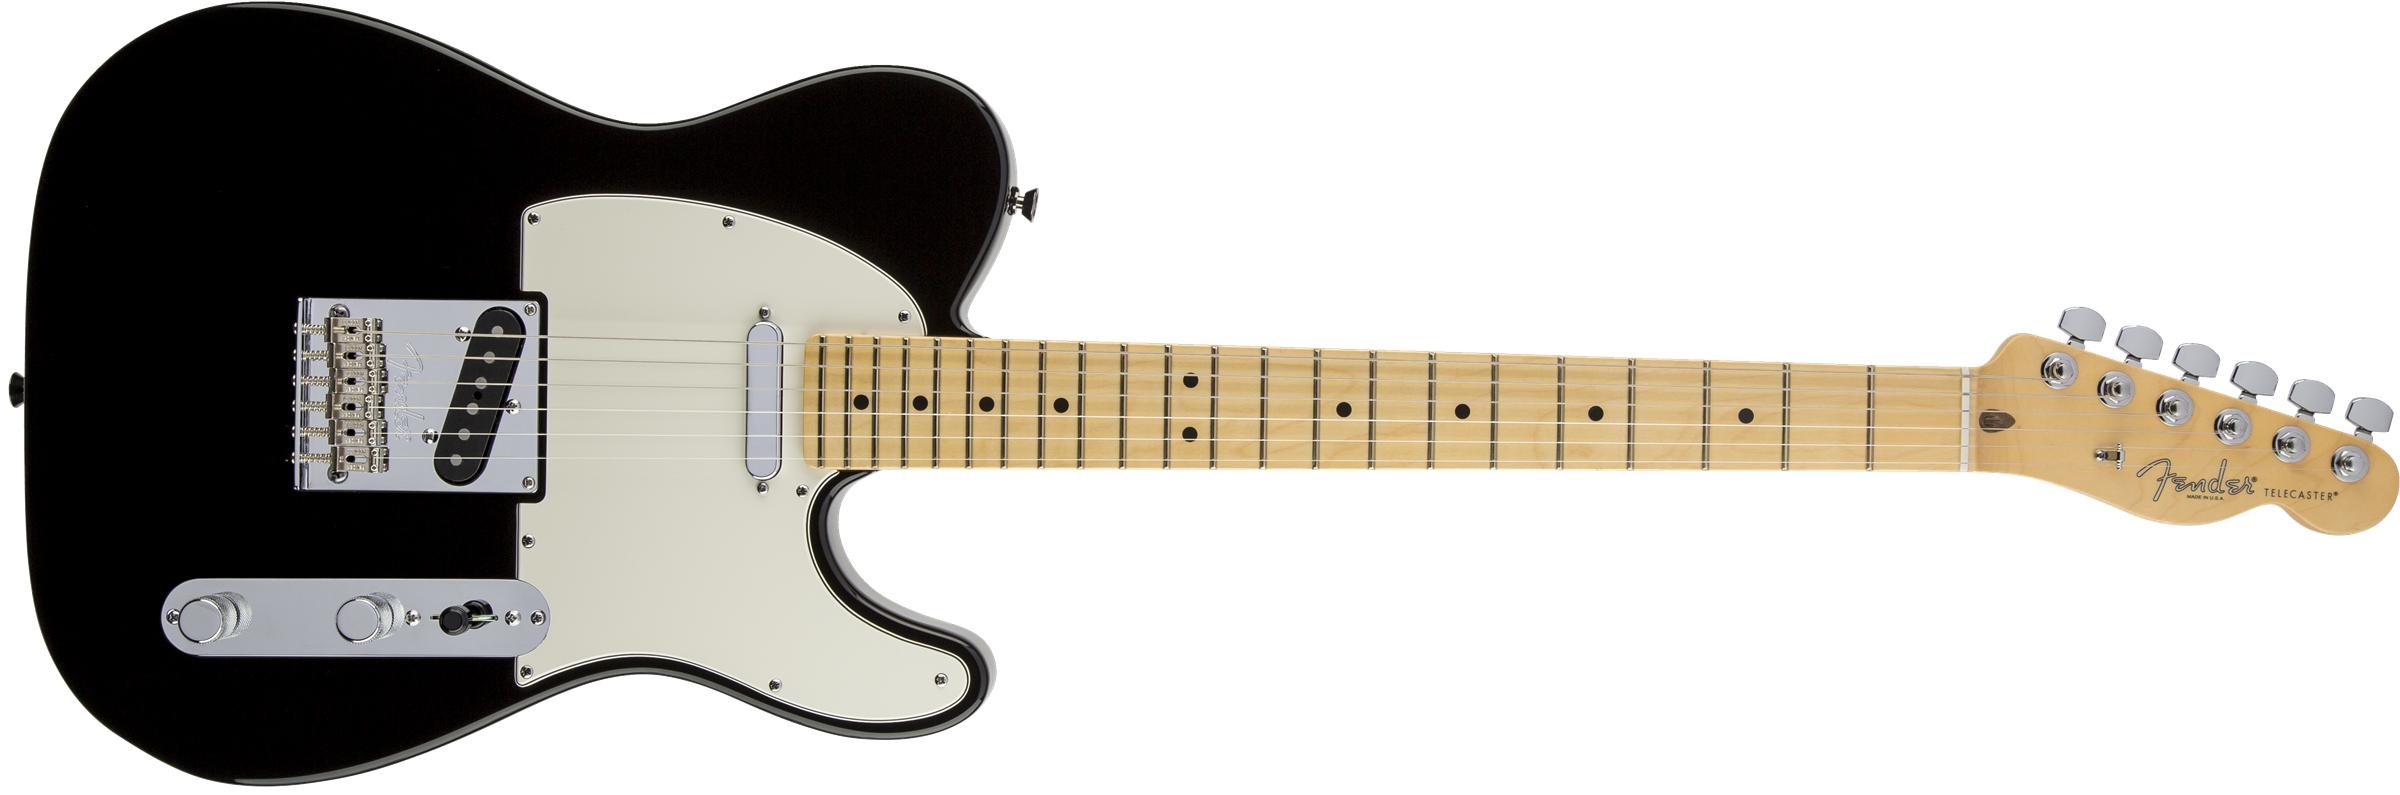 Fender Telecaster , HD Wallpaper & Backgrounds